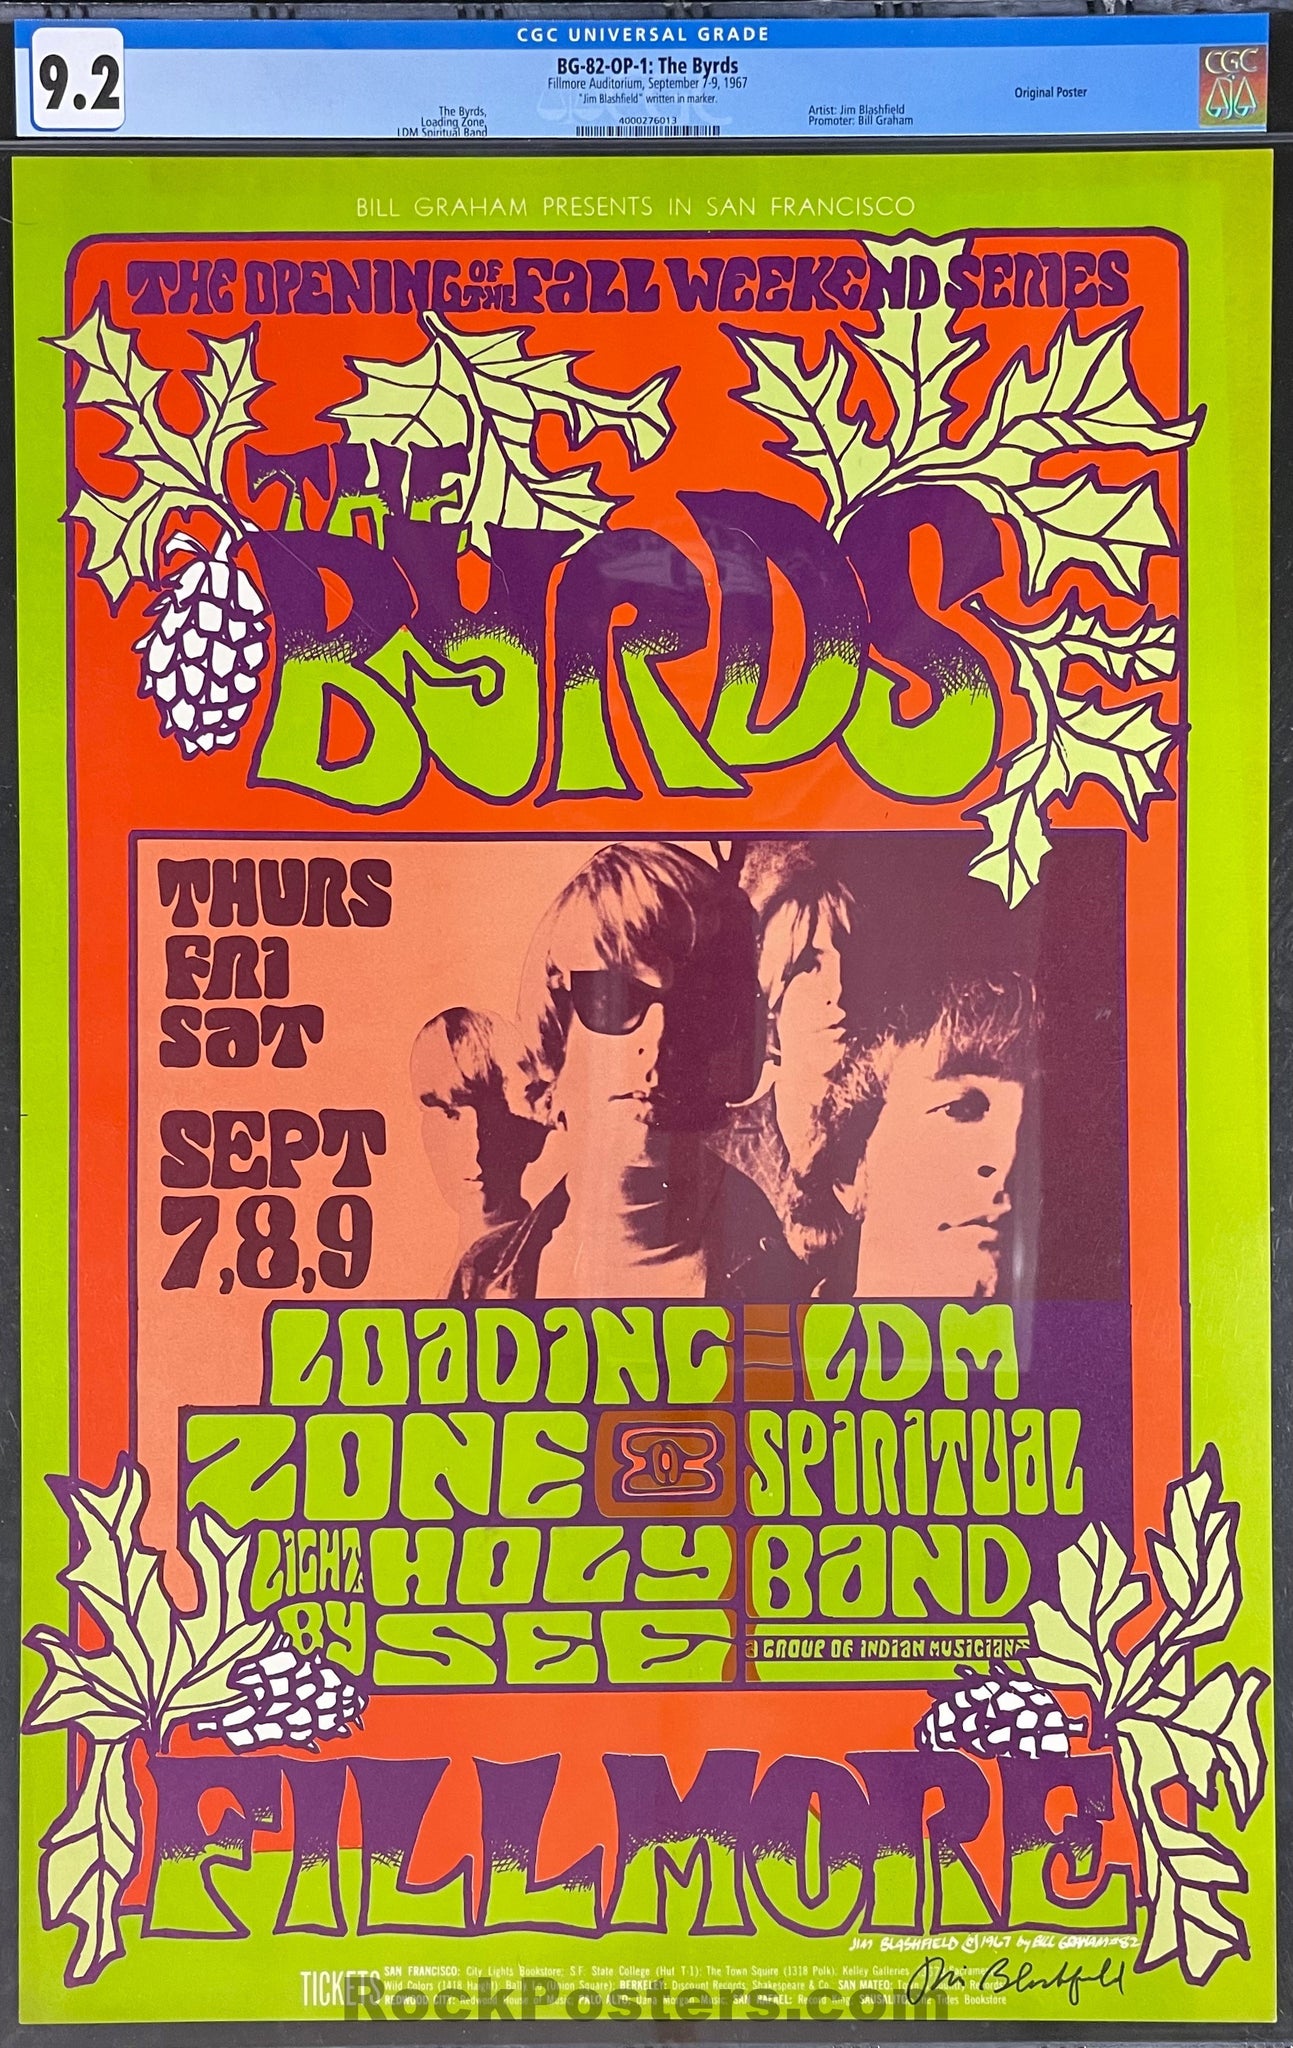 BG-82 - The Byrds - Jim Blashfield Signed - 1967 Poster - Fillmore Auditorium - CGC Graded 9.2